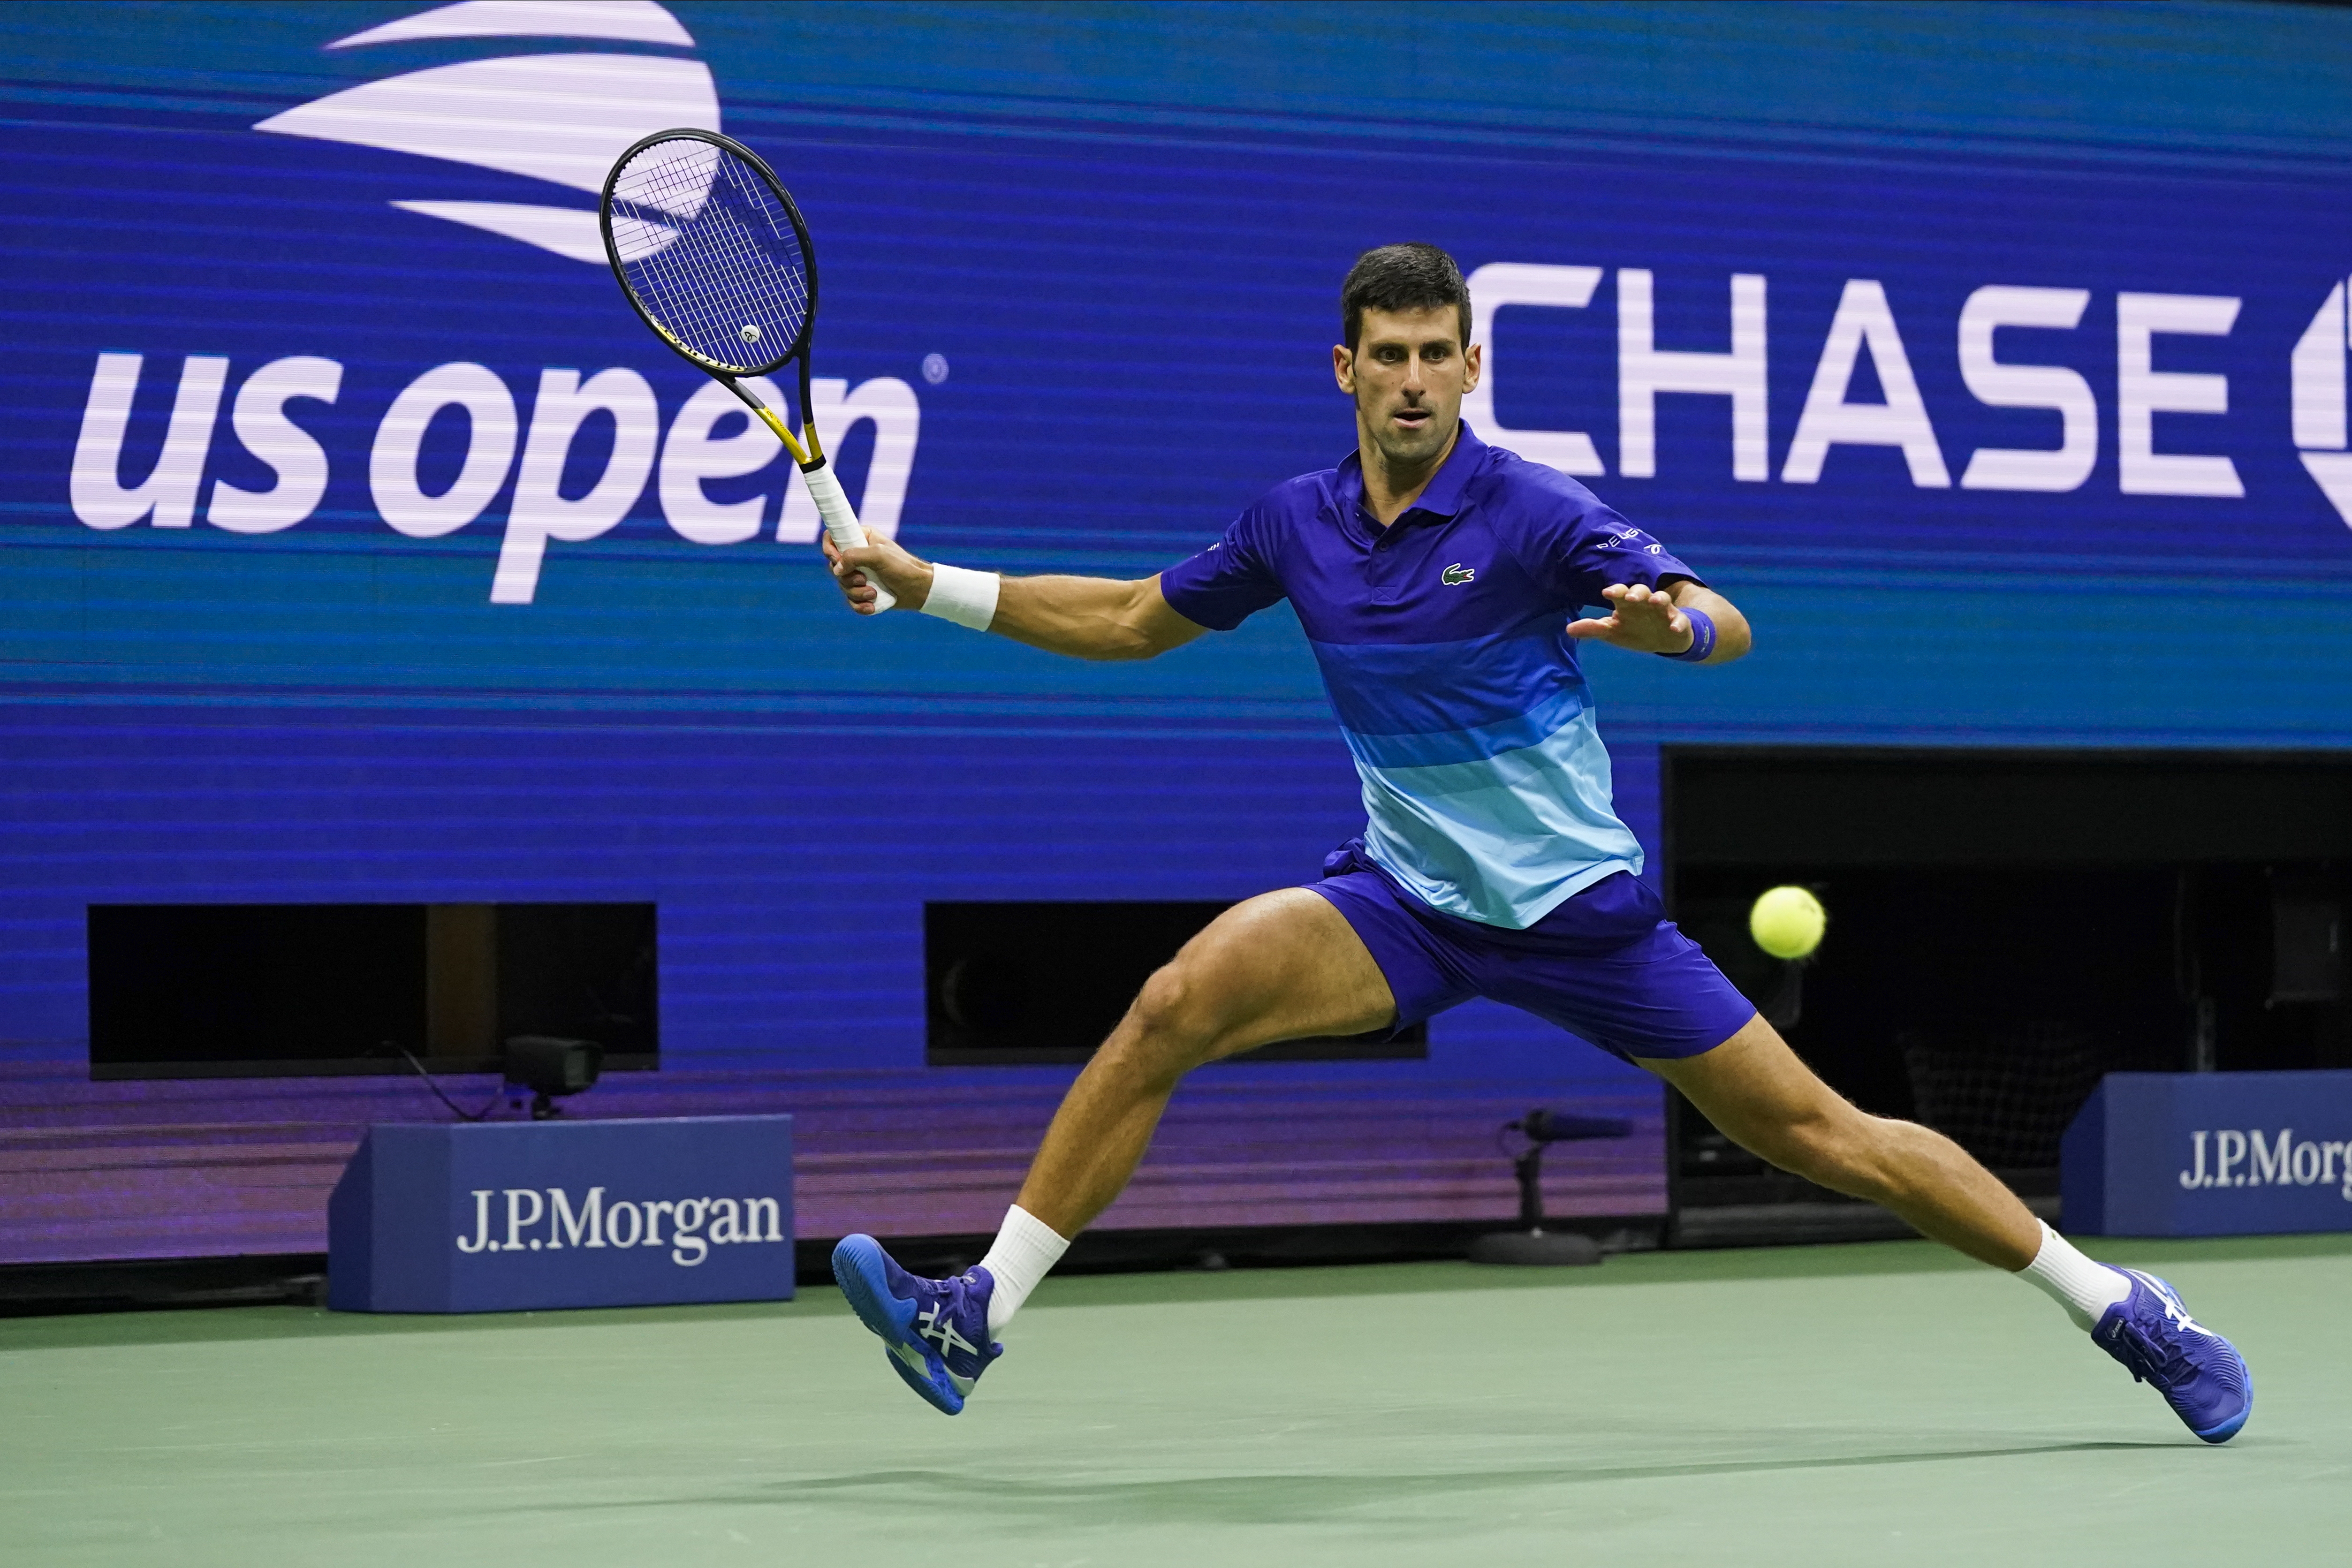 US Open 2021 Mens Final FREE LIVE STREAM (9/12/21) Watch Novak Djokovic vs